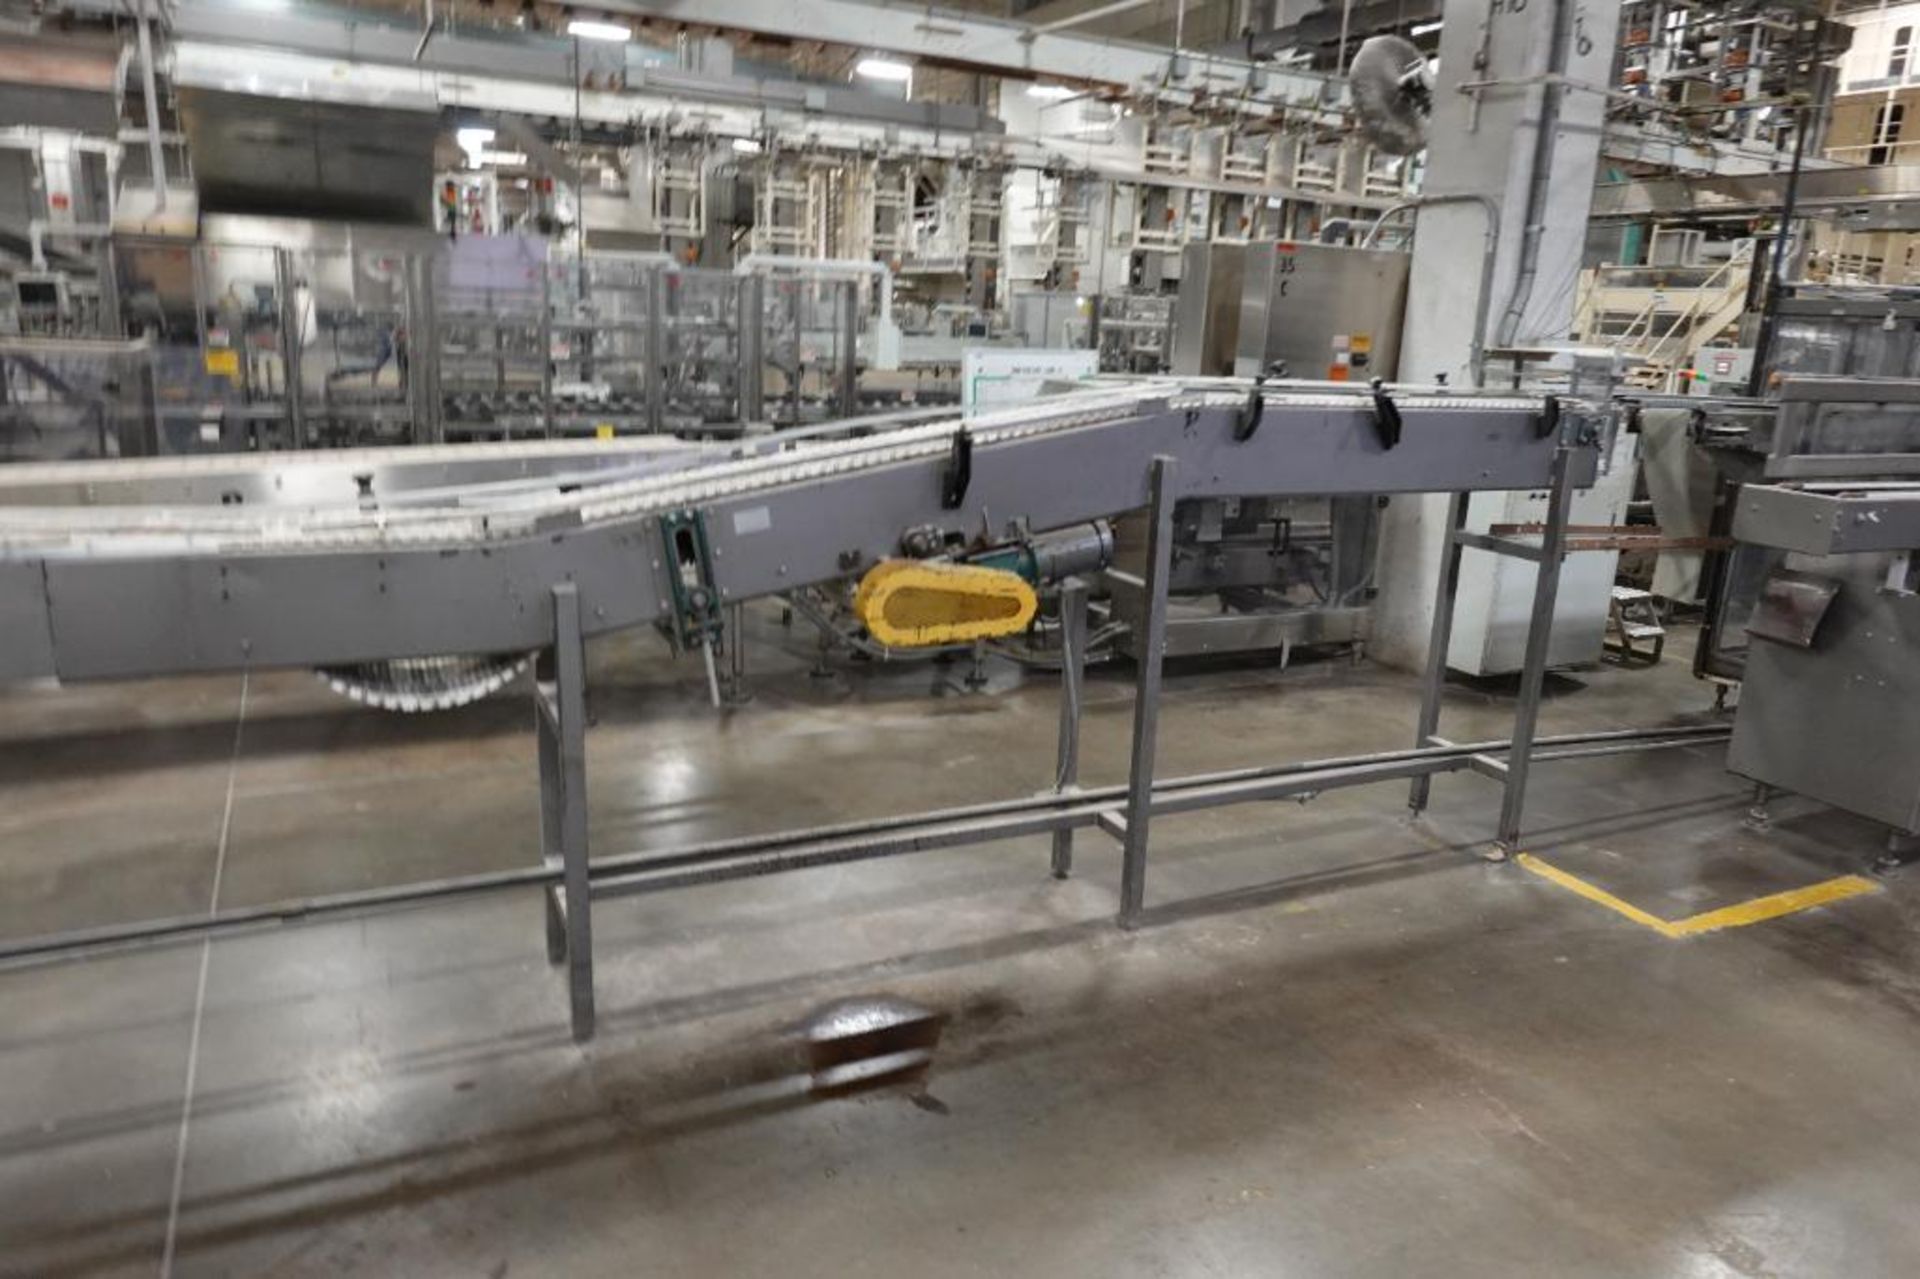 Safeline metal detector with conveyor - Image 4 of 14